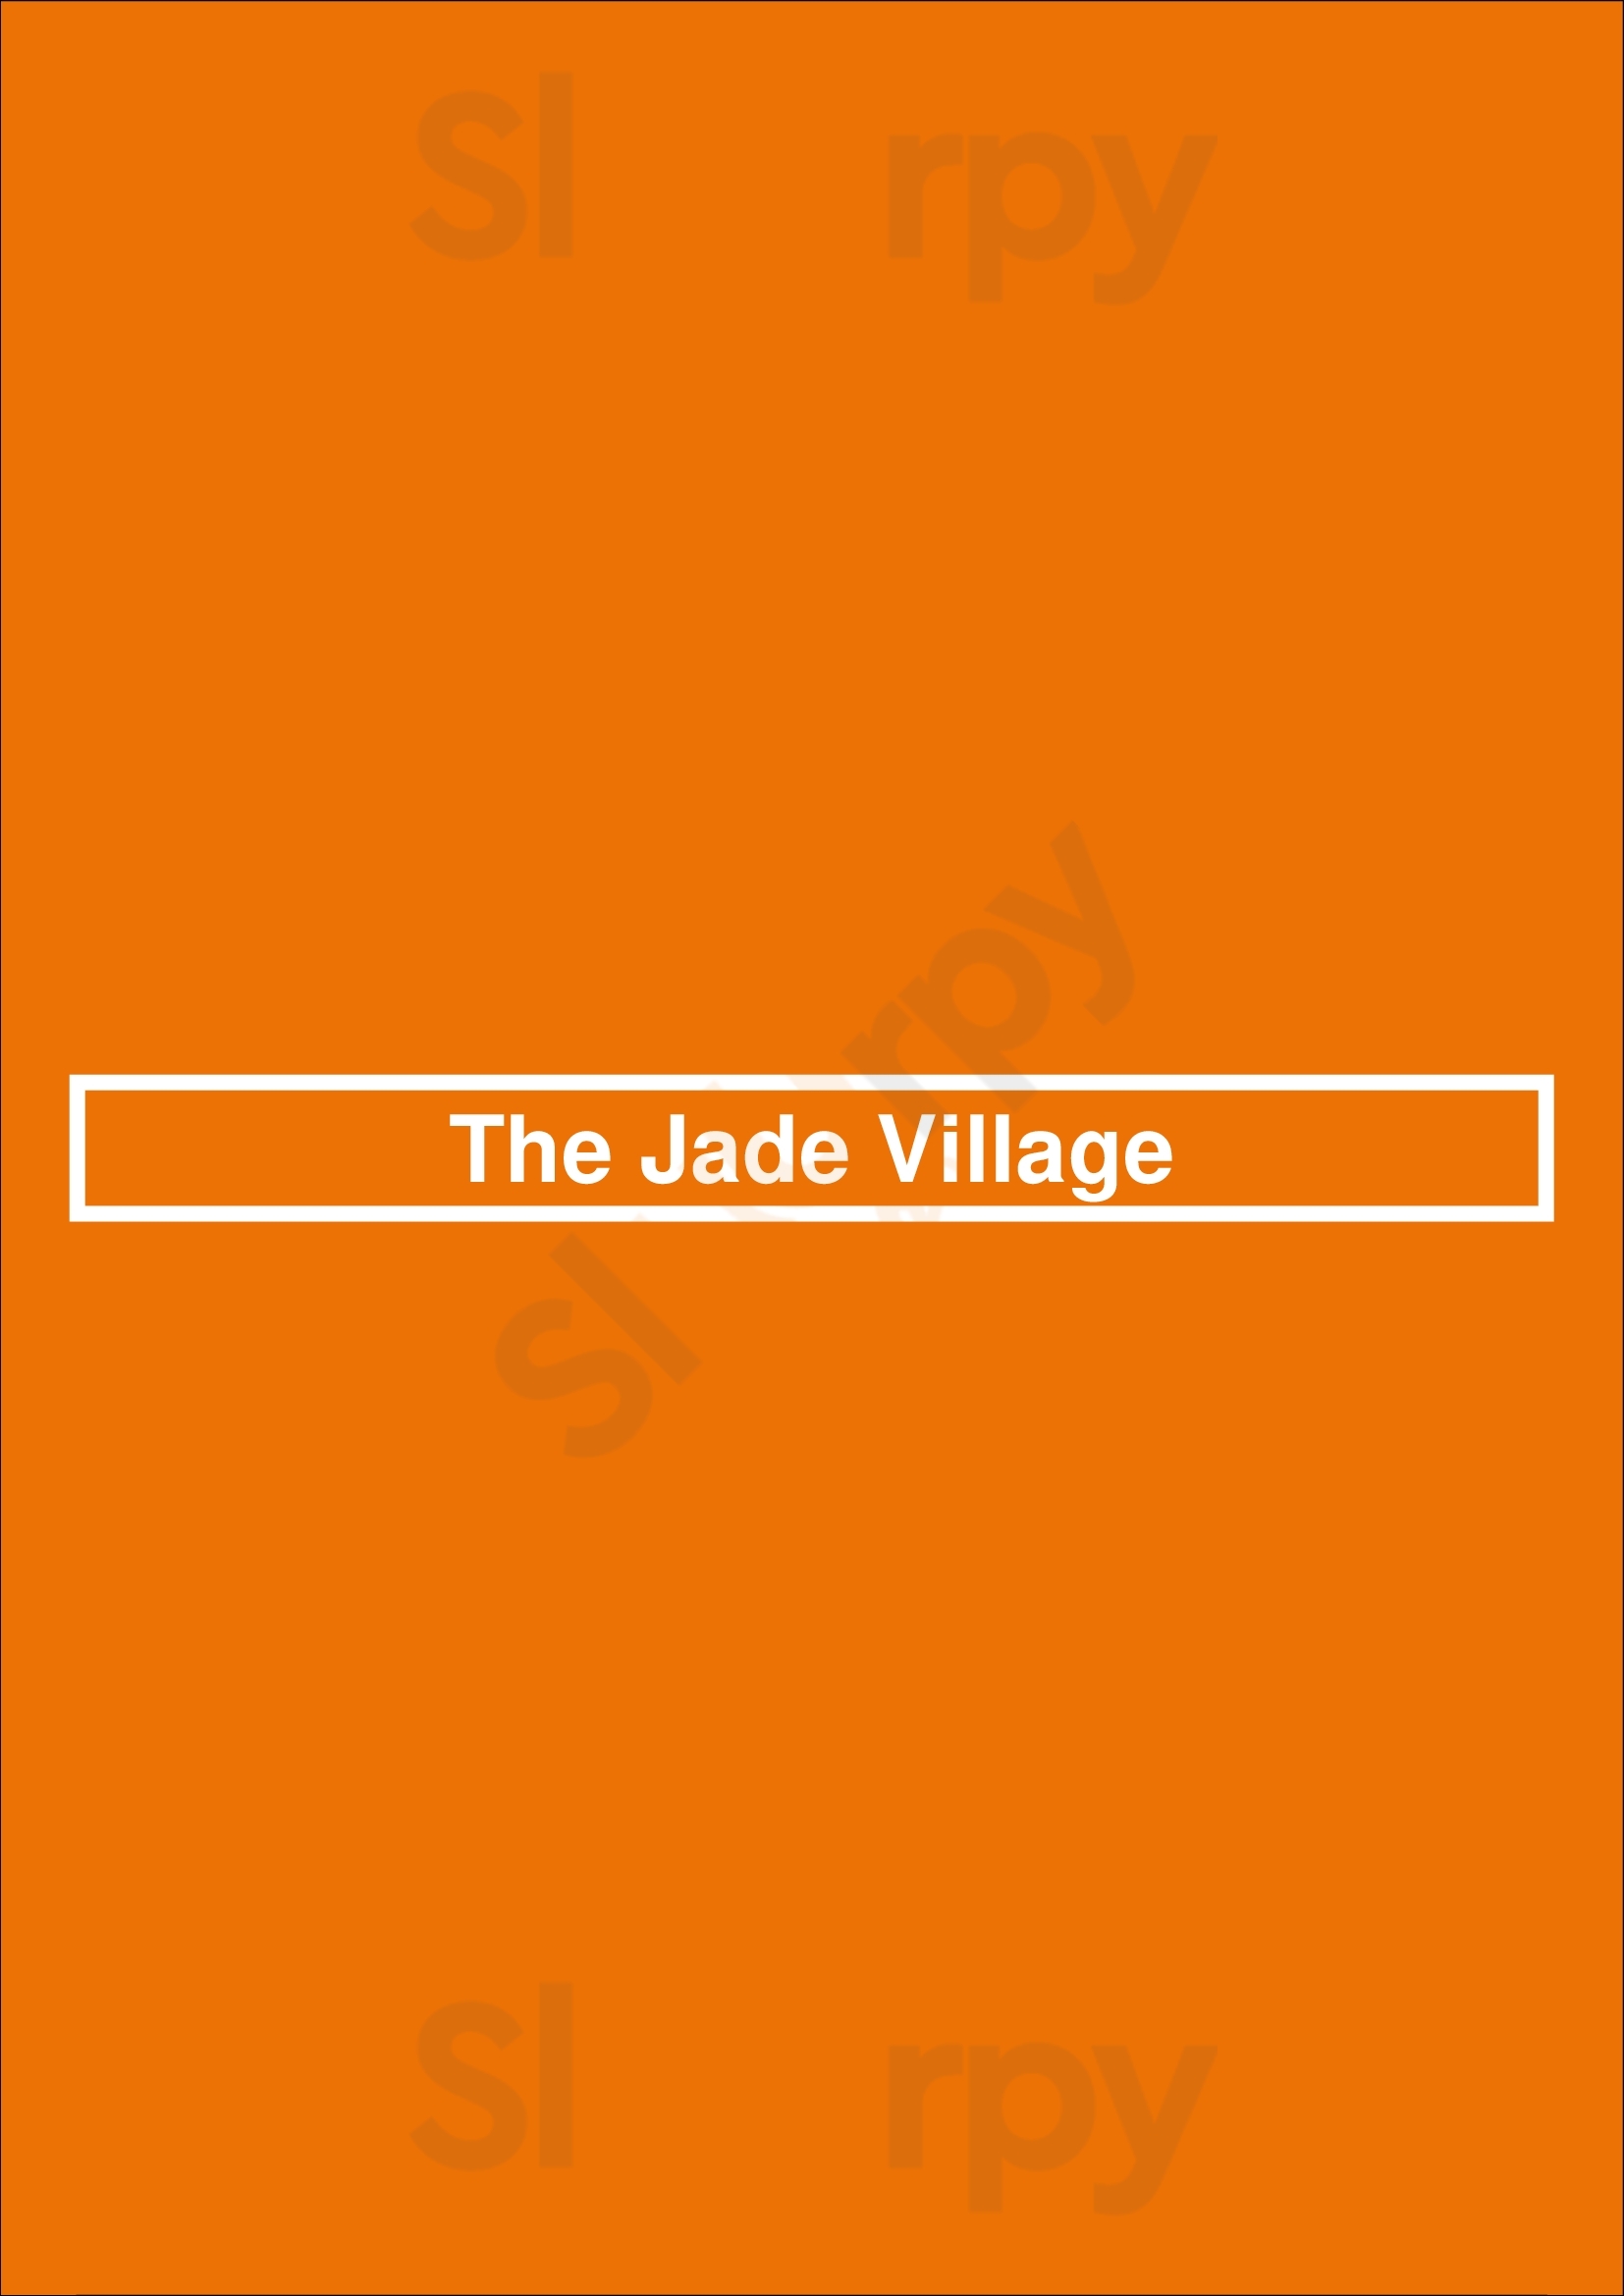 The Jade Village St. Albert Menu - 1